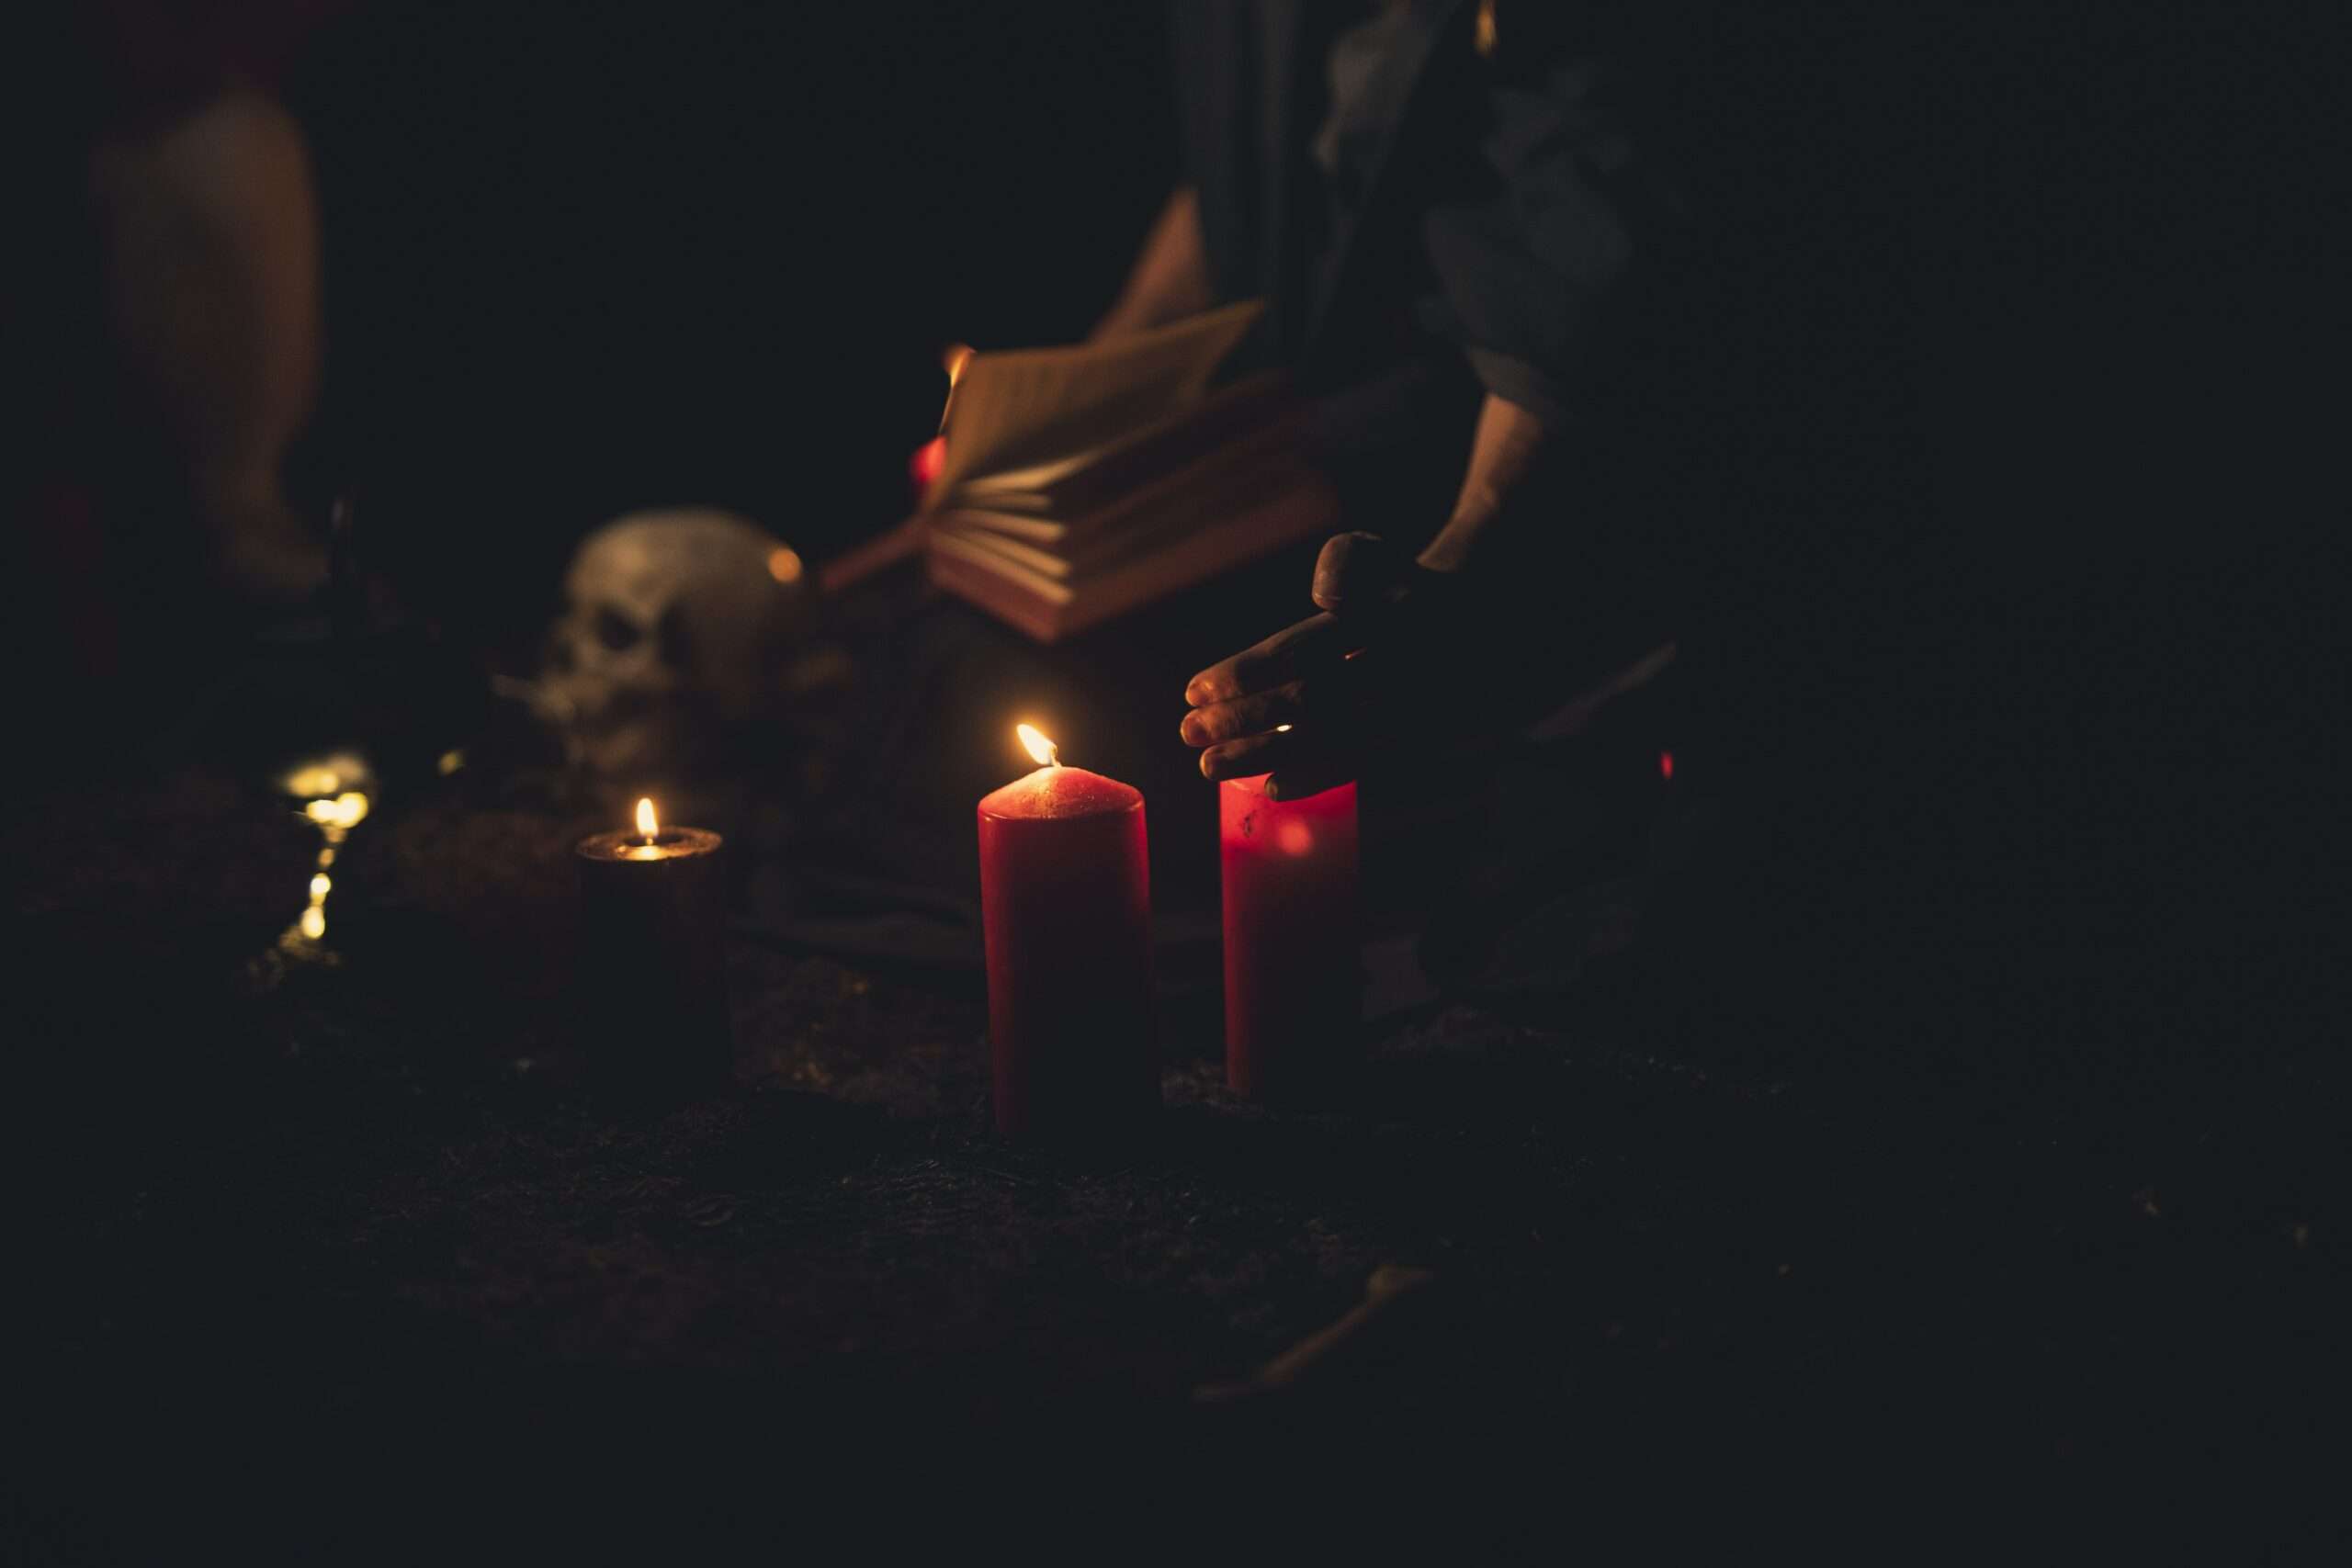 candles-skull-halloween-dark-night